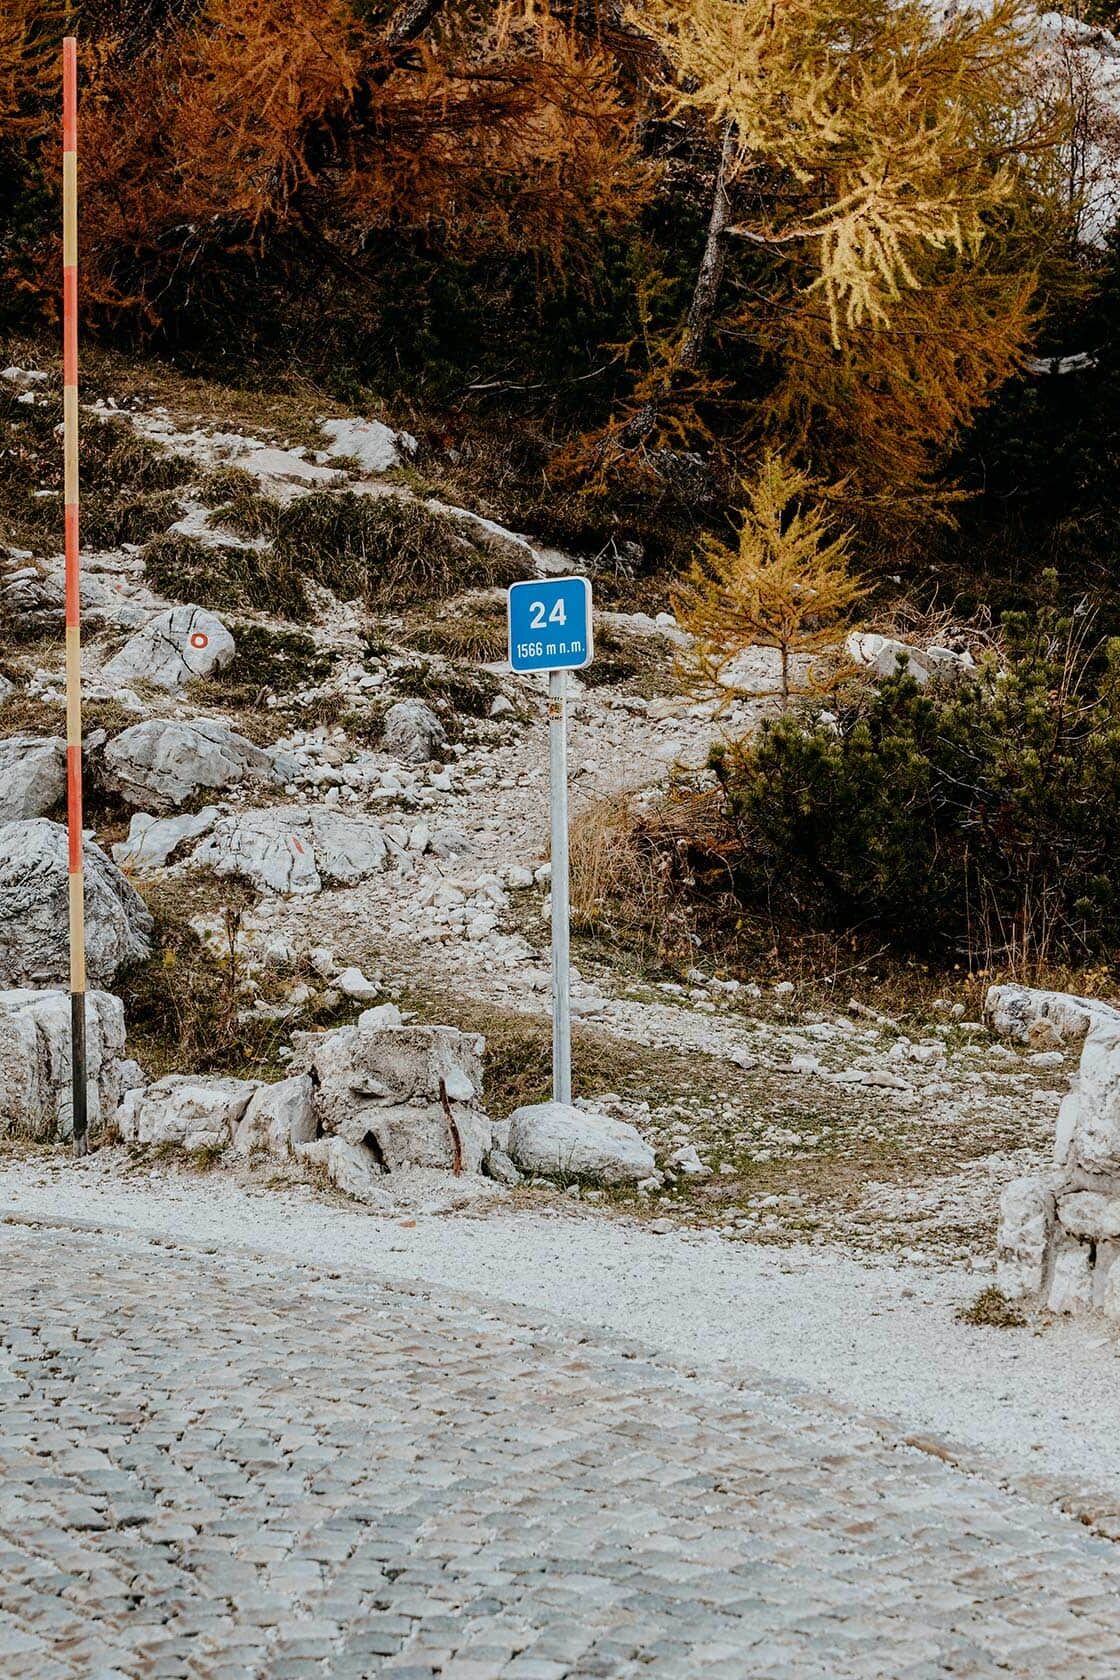 Vrsic pass in Slovenia